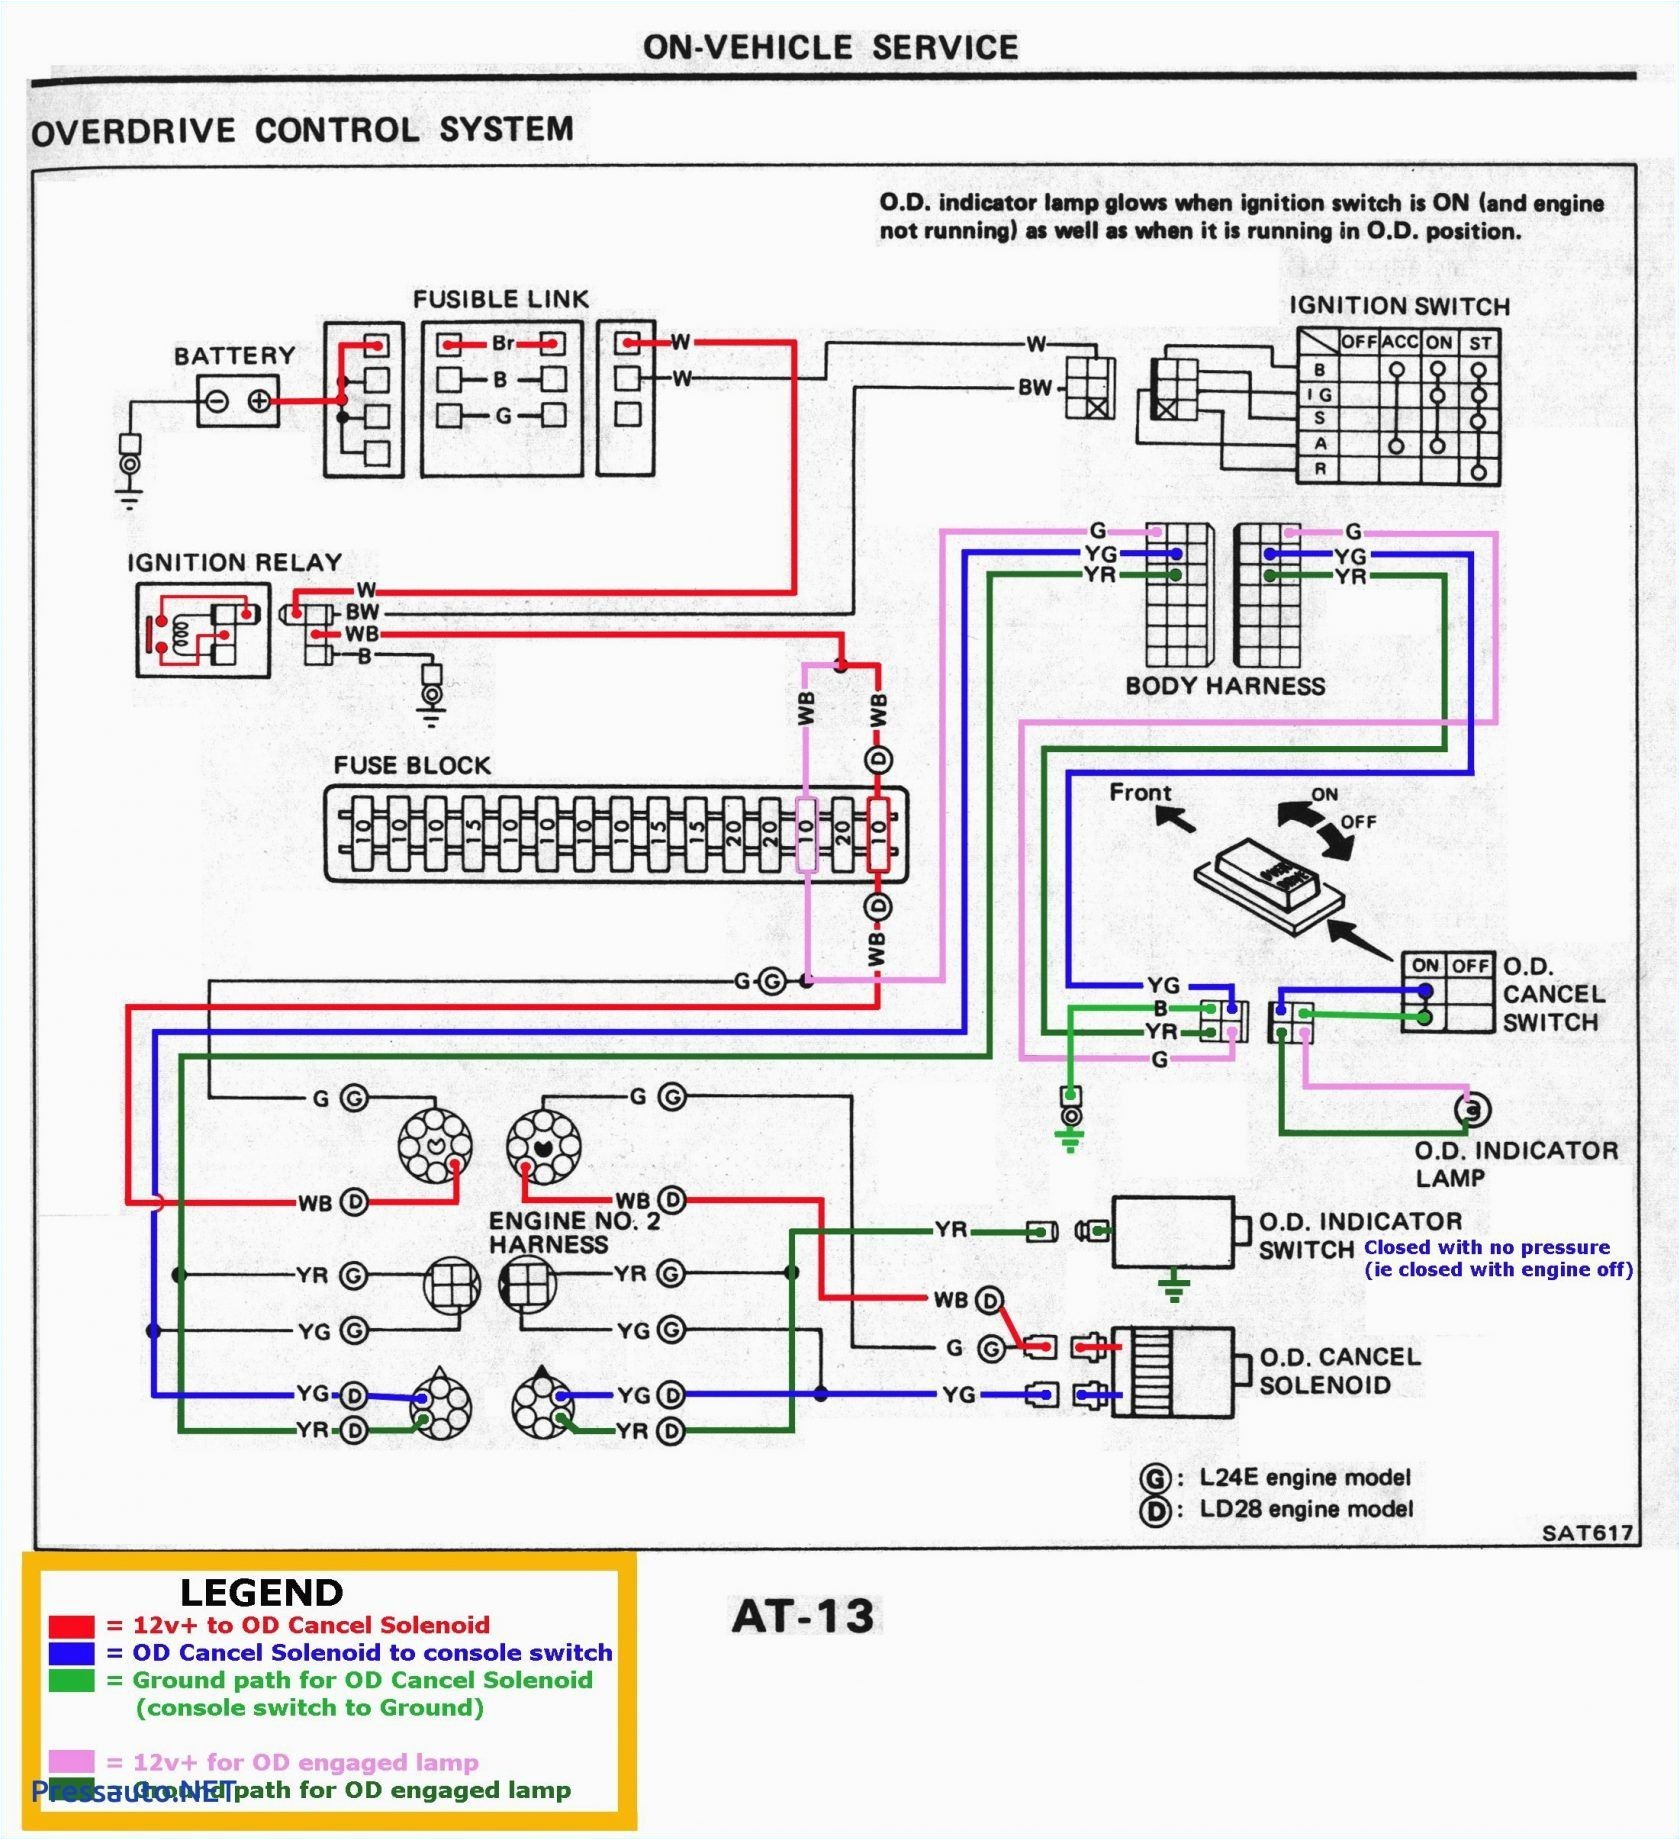 sds wiring diagram blog wiring diagram sds em 4 wiring diagram sds wiring diagram